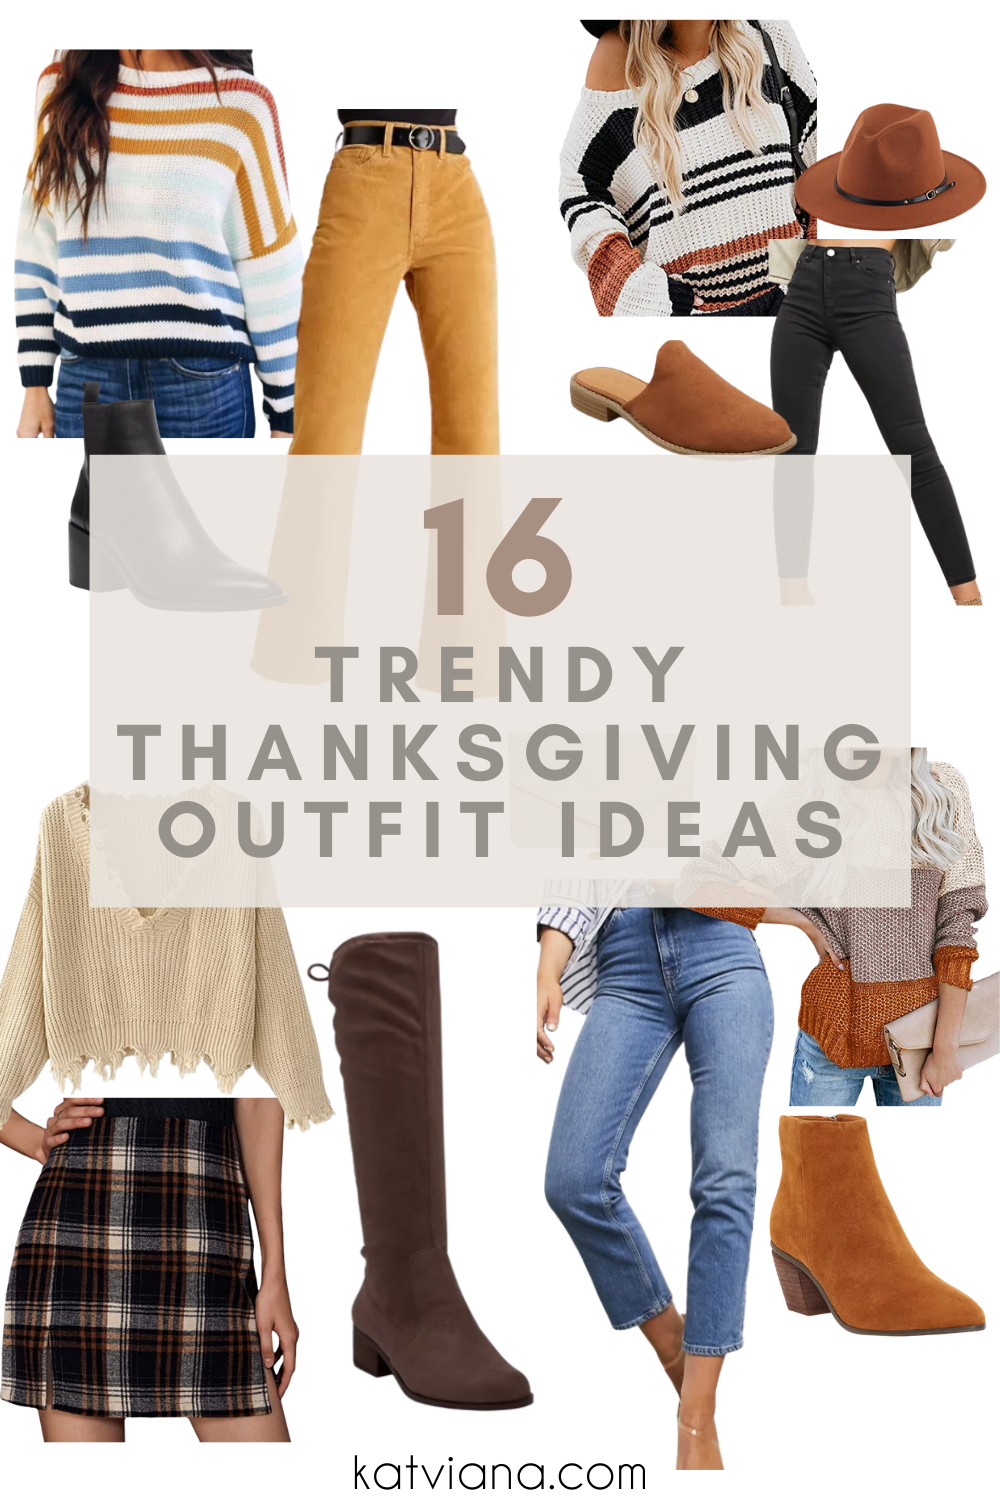 16 Trendy Thanksgiving Outfit Ideas | Kat Viana